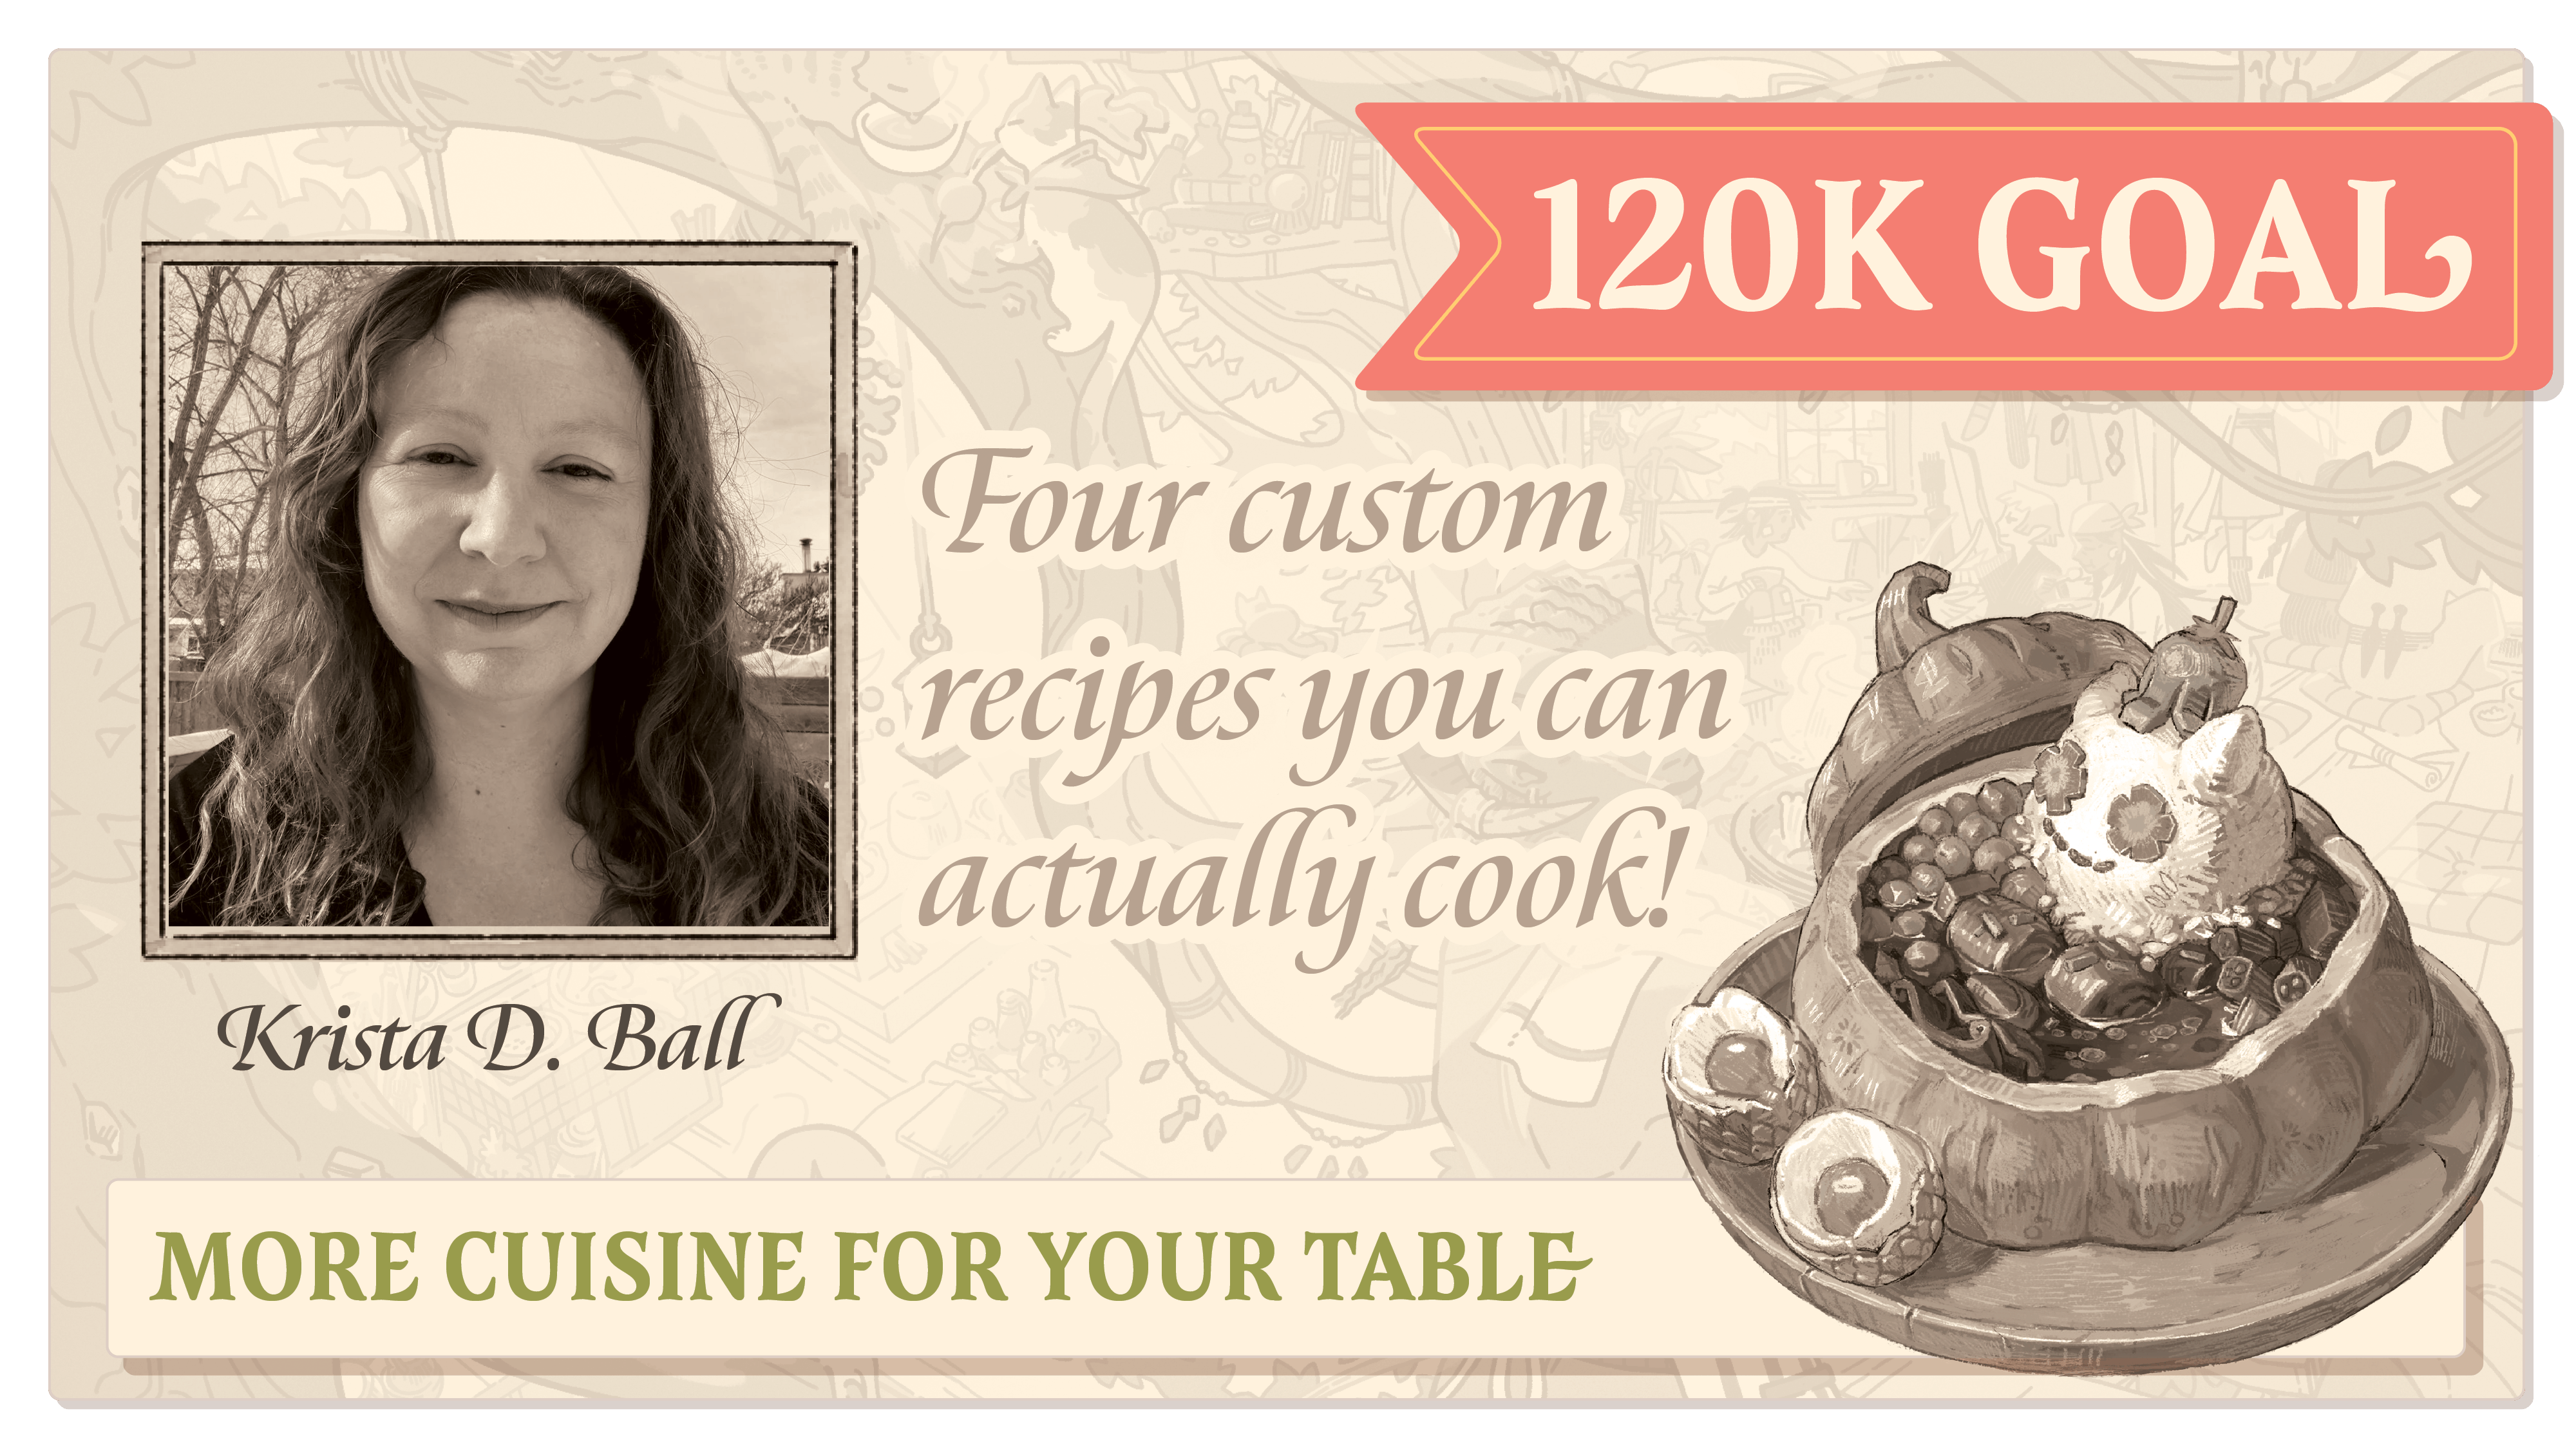 Four custom recipes you can cook!